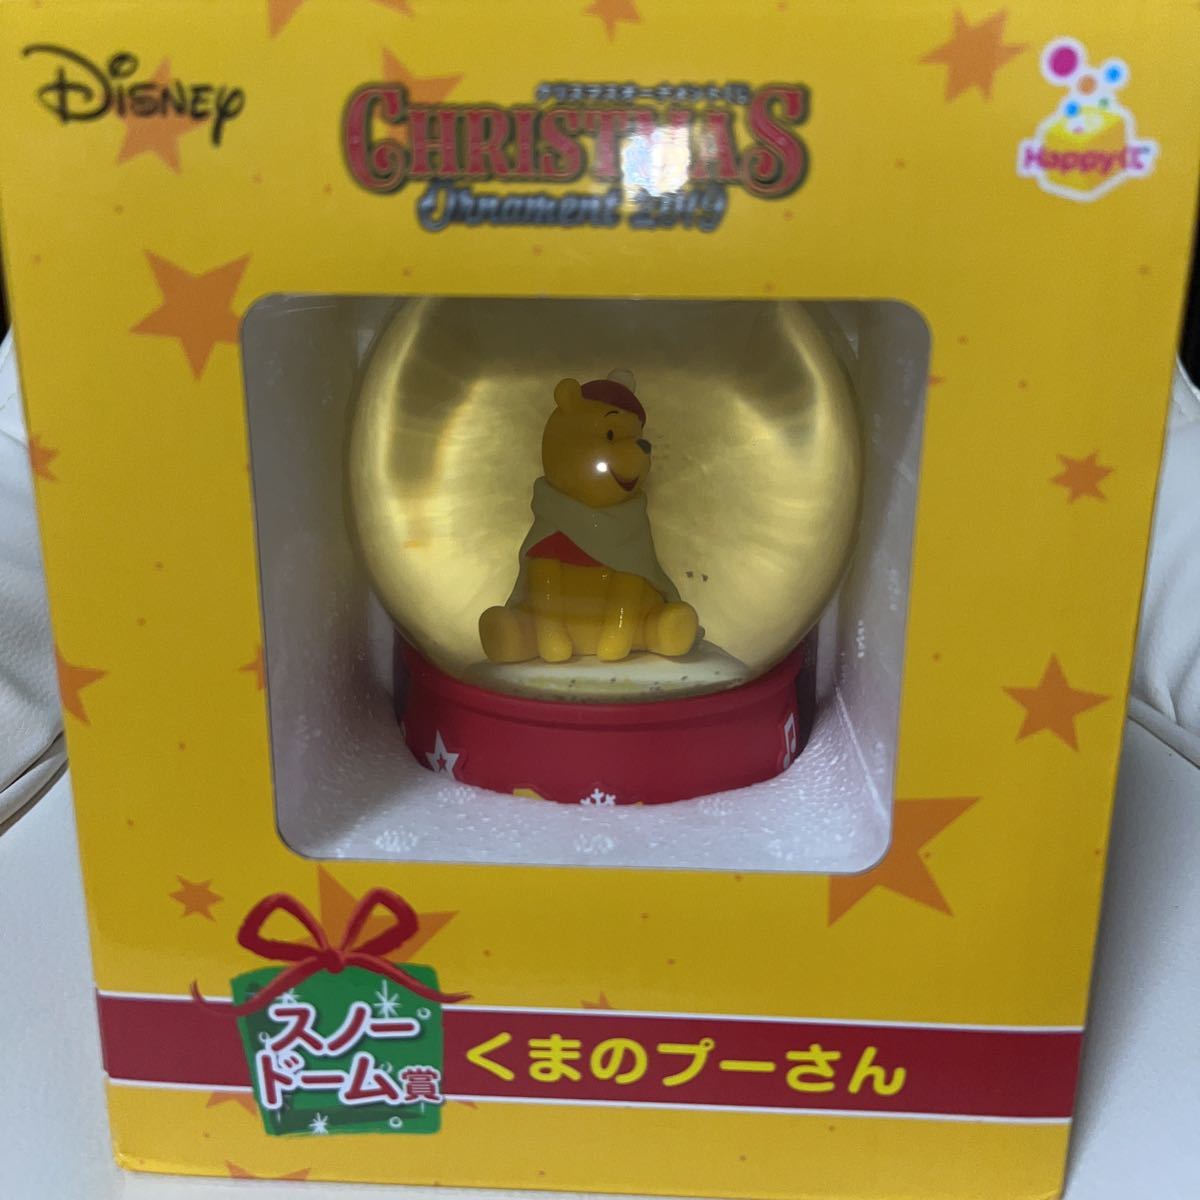  Disney Винни Пух "снежный шар" Рождество орнамент жребий 2019 Happy жребий солнечный taDisney